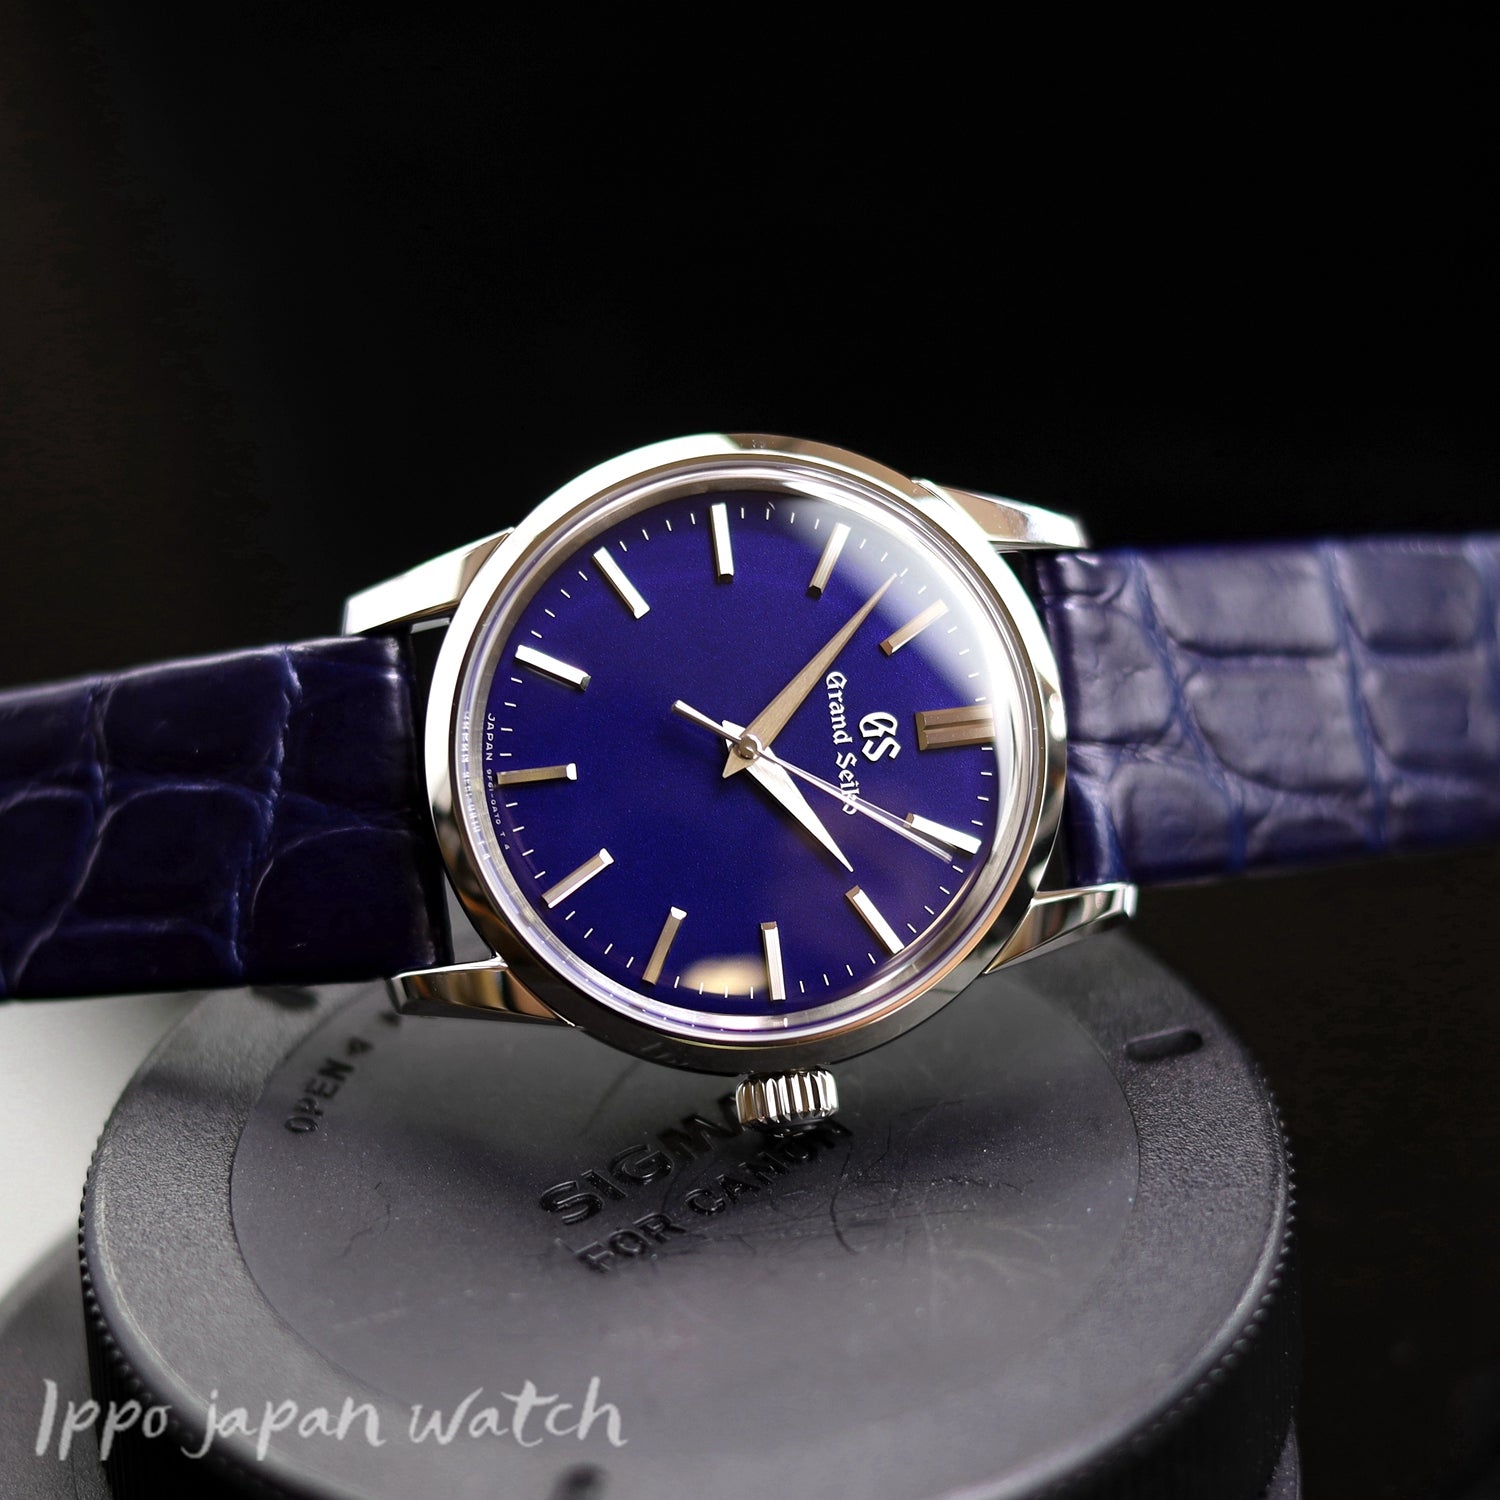 Grand Seiko Elegance Collection SBGX349 9F61 Battery-powered quartz watch - IPPO JAPAN WATCH 